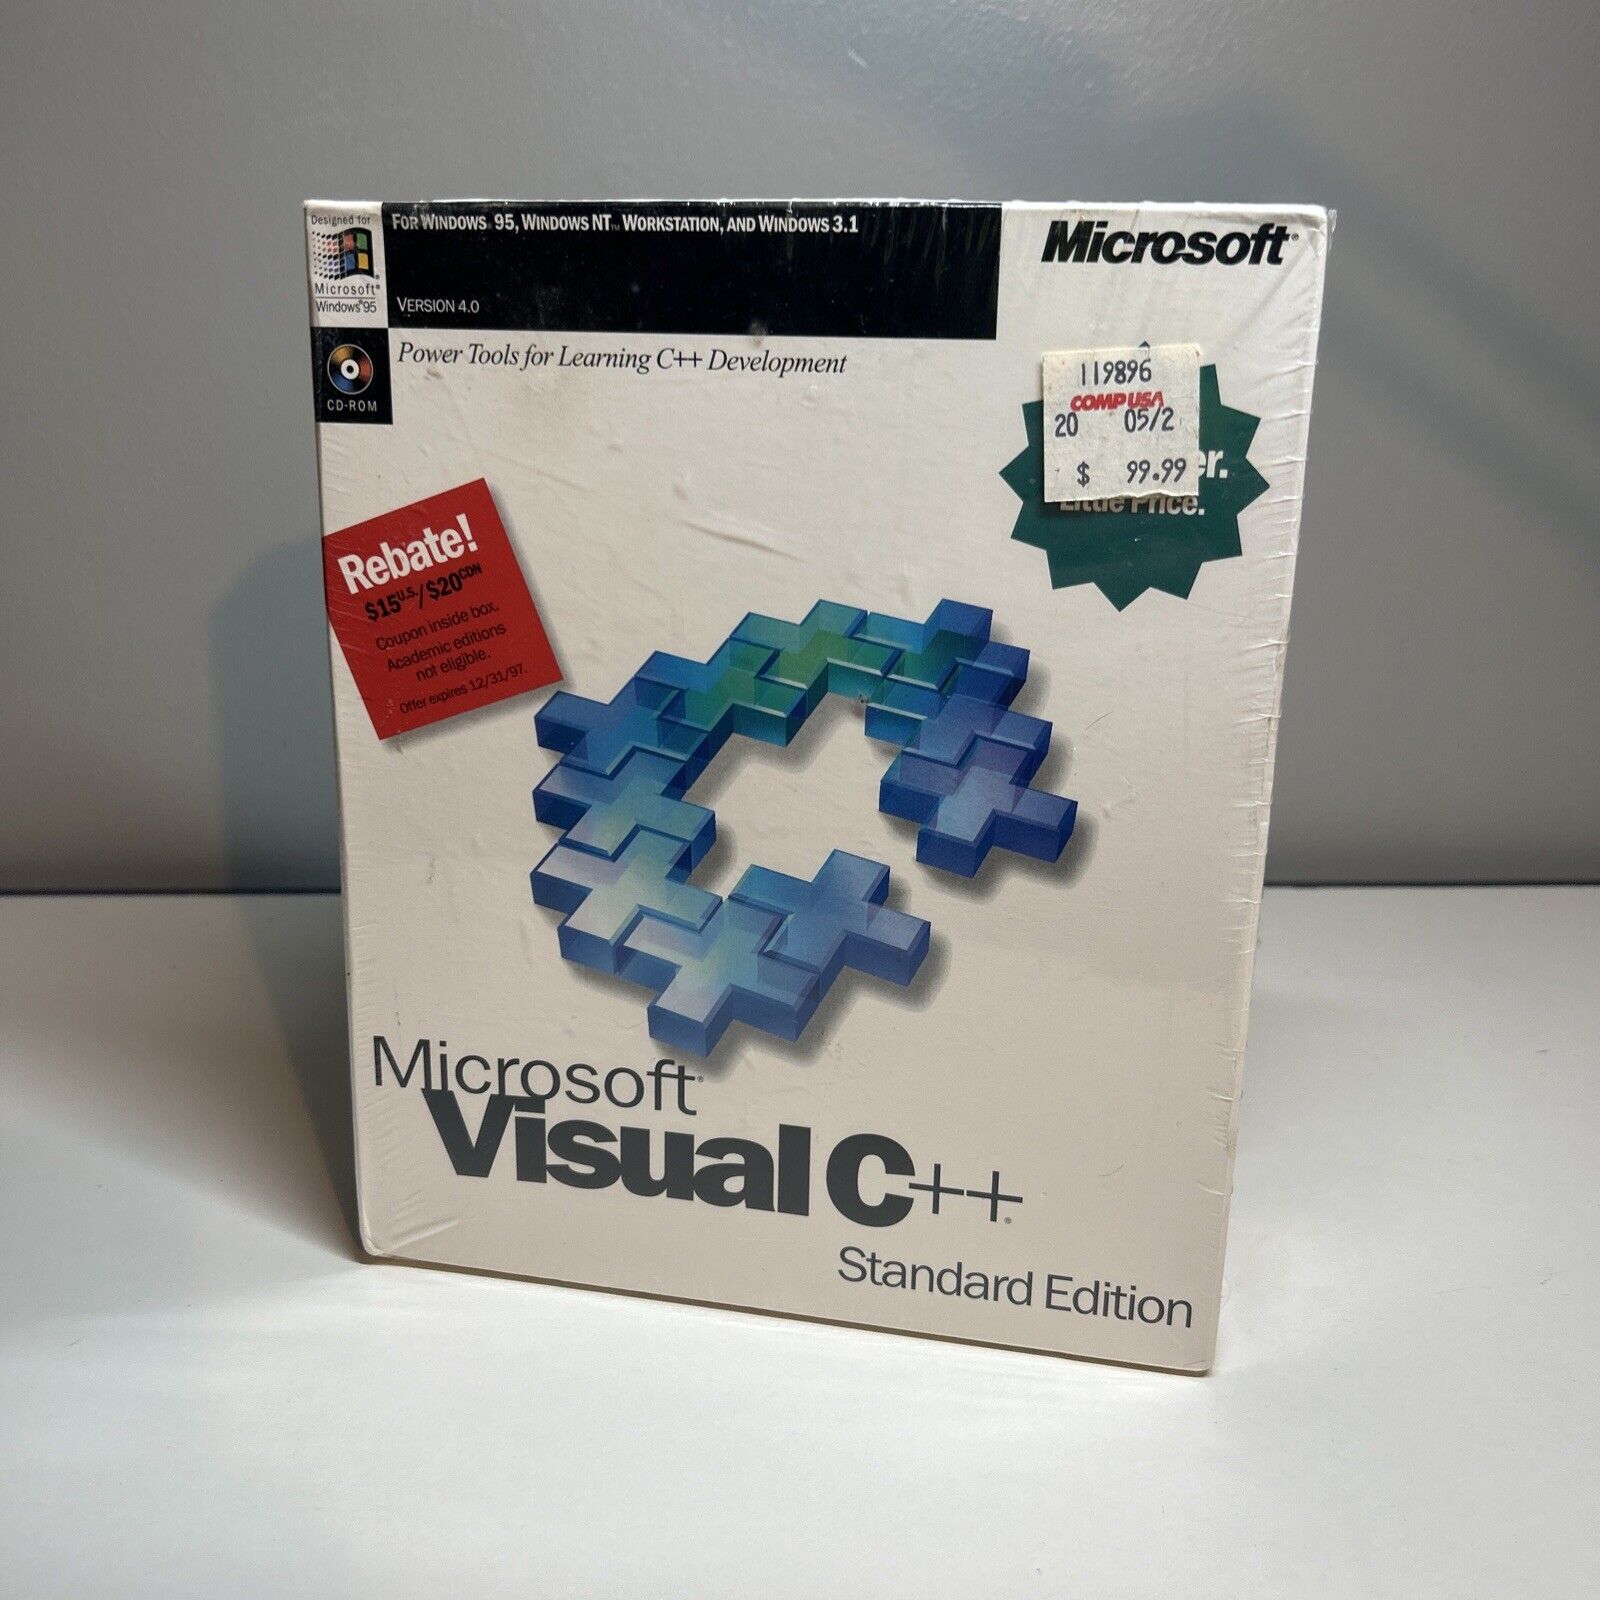 Microsoft Visual C++ Standard Edition 4.0 + 1.52 Windows 95 / NT Workstation+3.1